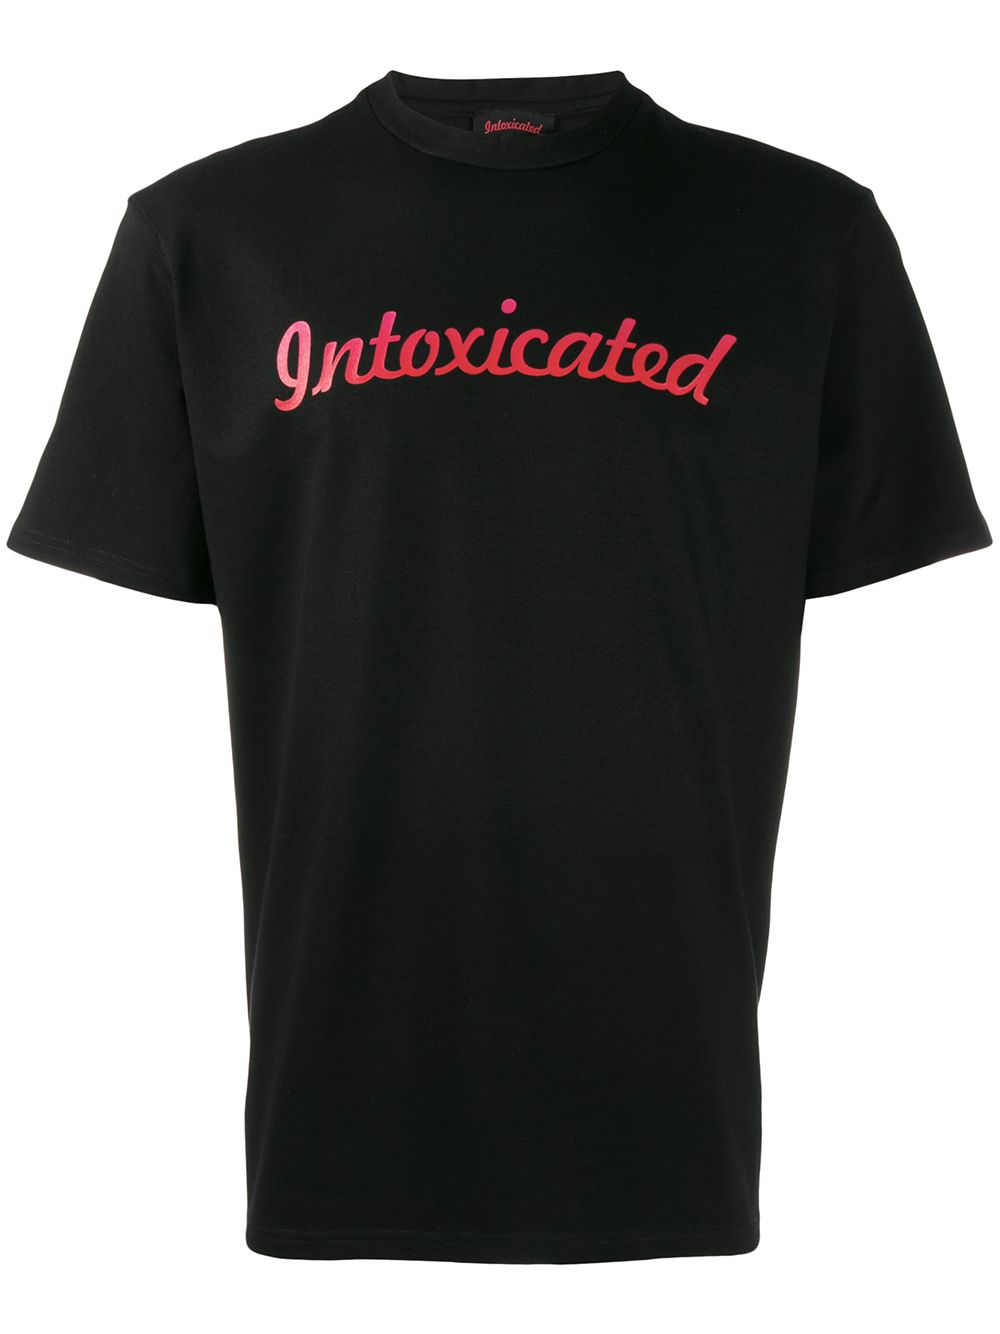 фото Intoxicated футболка с круглым вырезом и логотипом